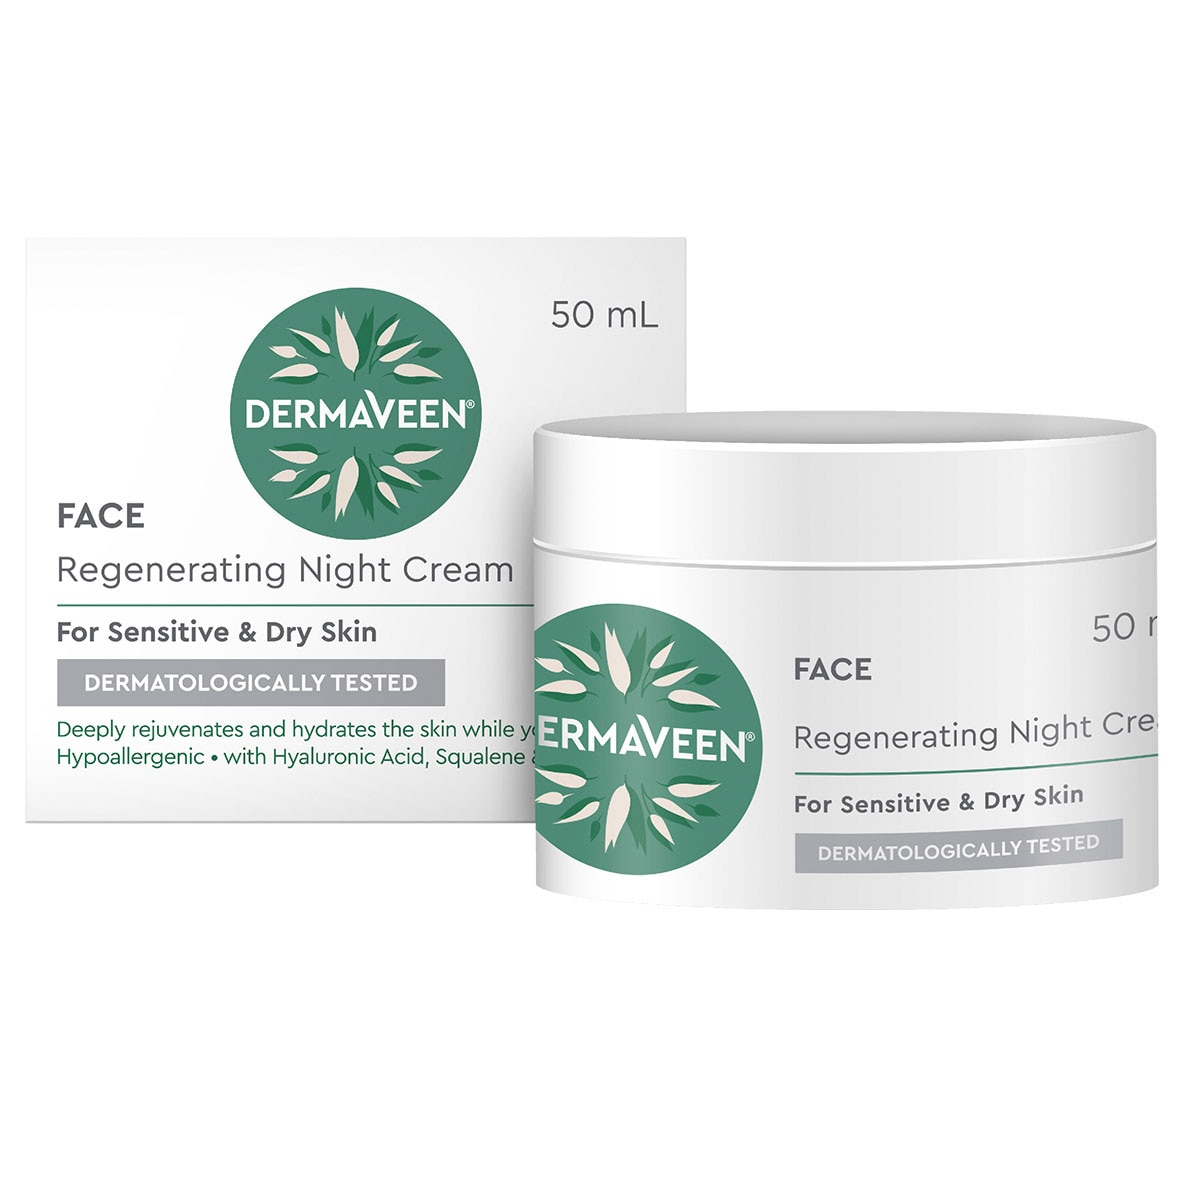 Night Cream for Dry and Sensitive Skin 50 ml